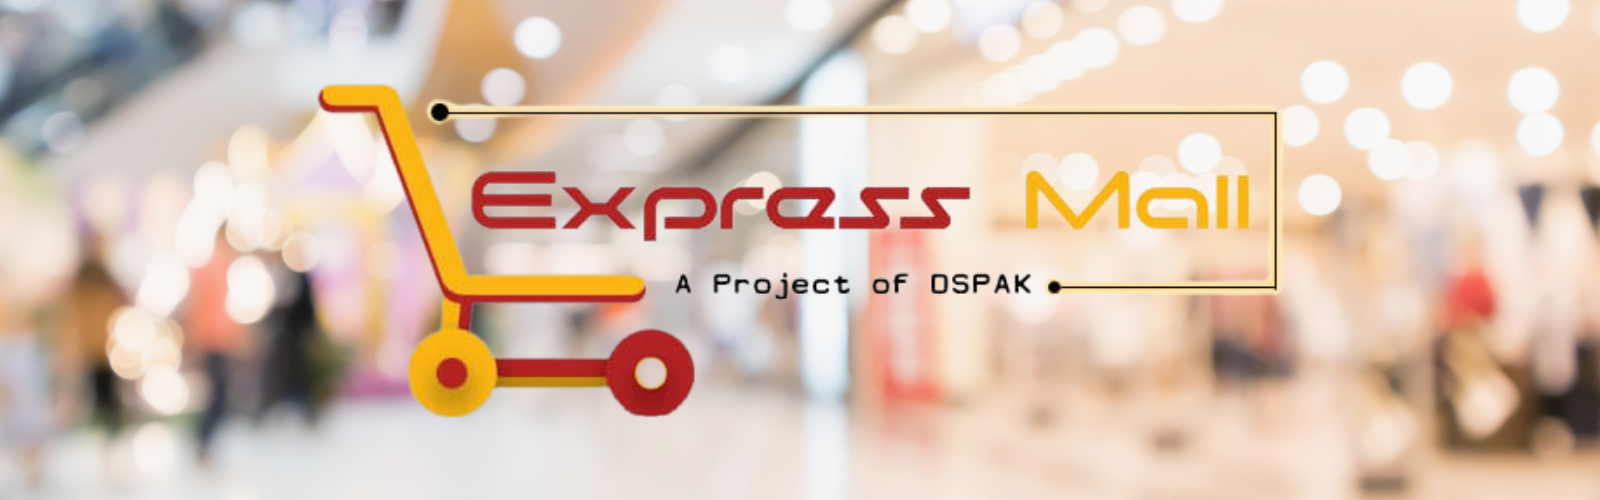 Express Mall